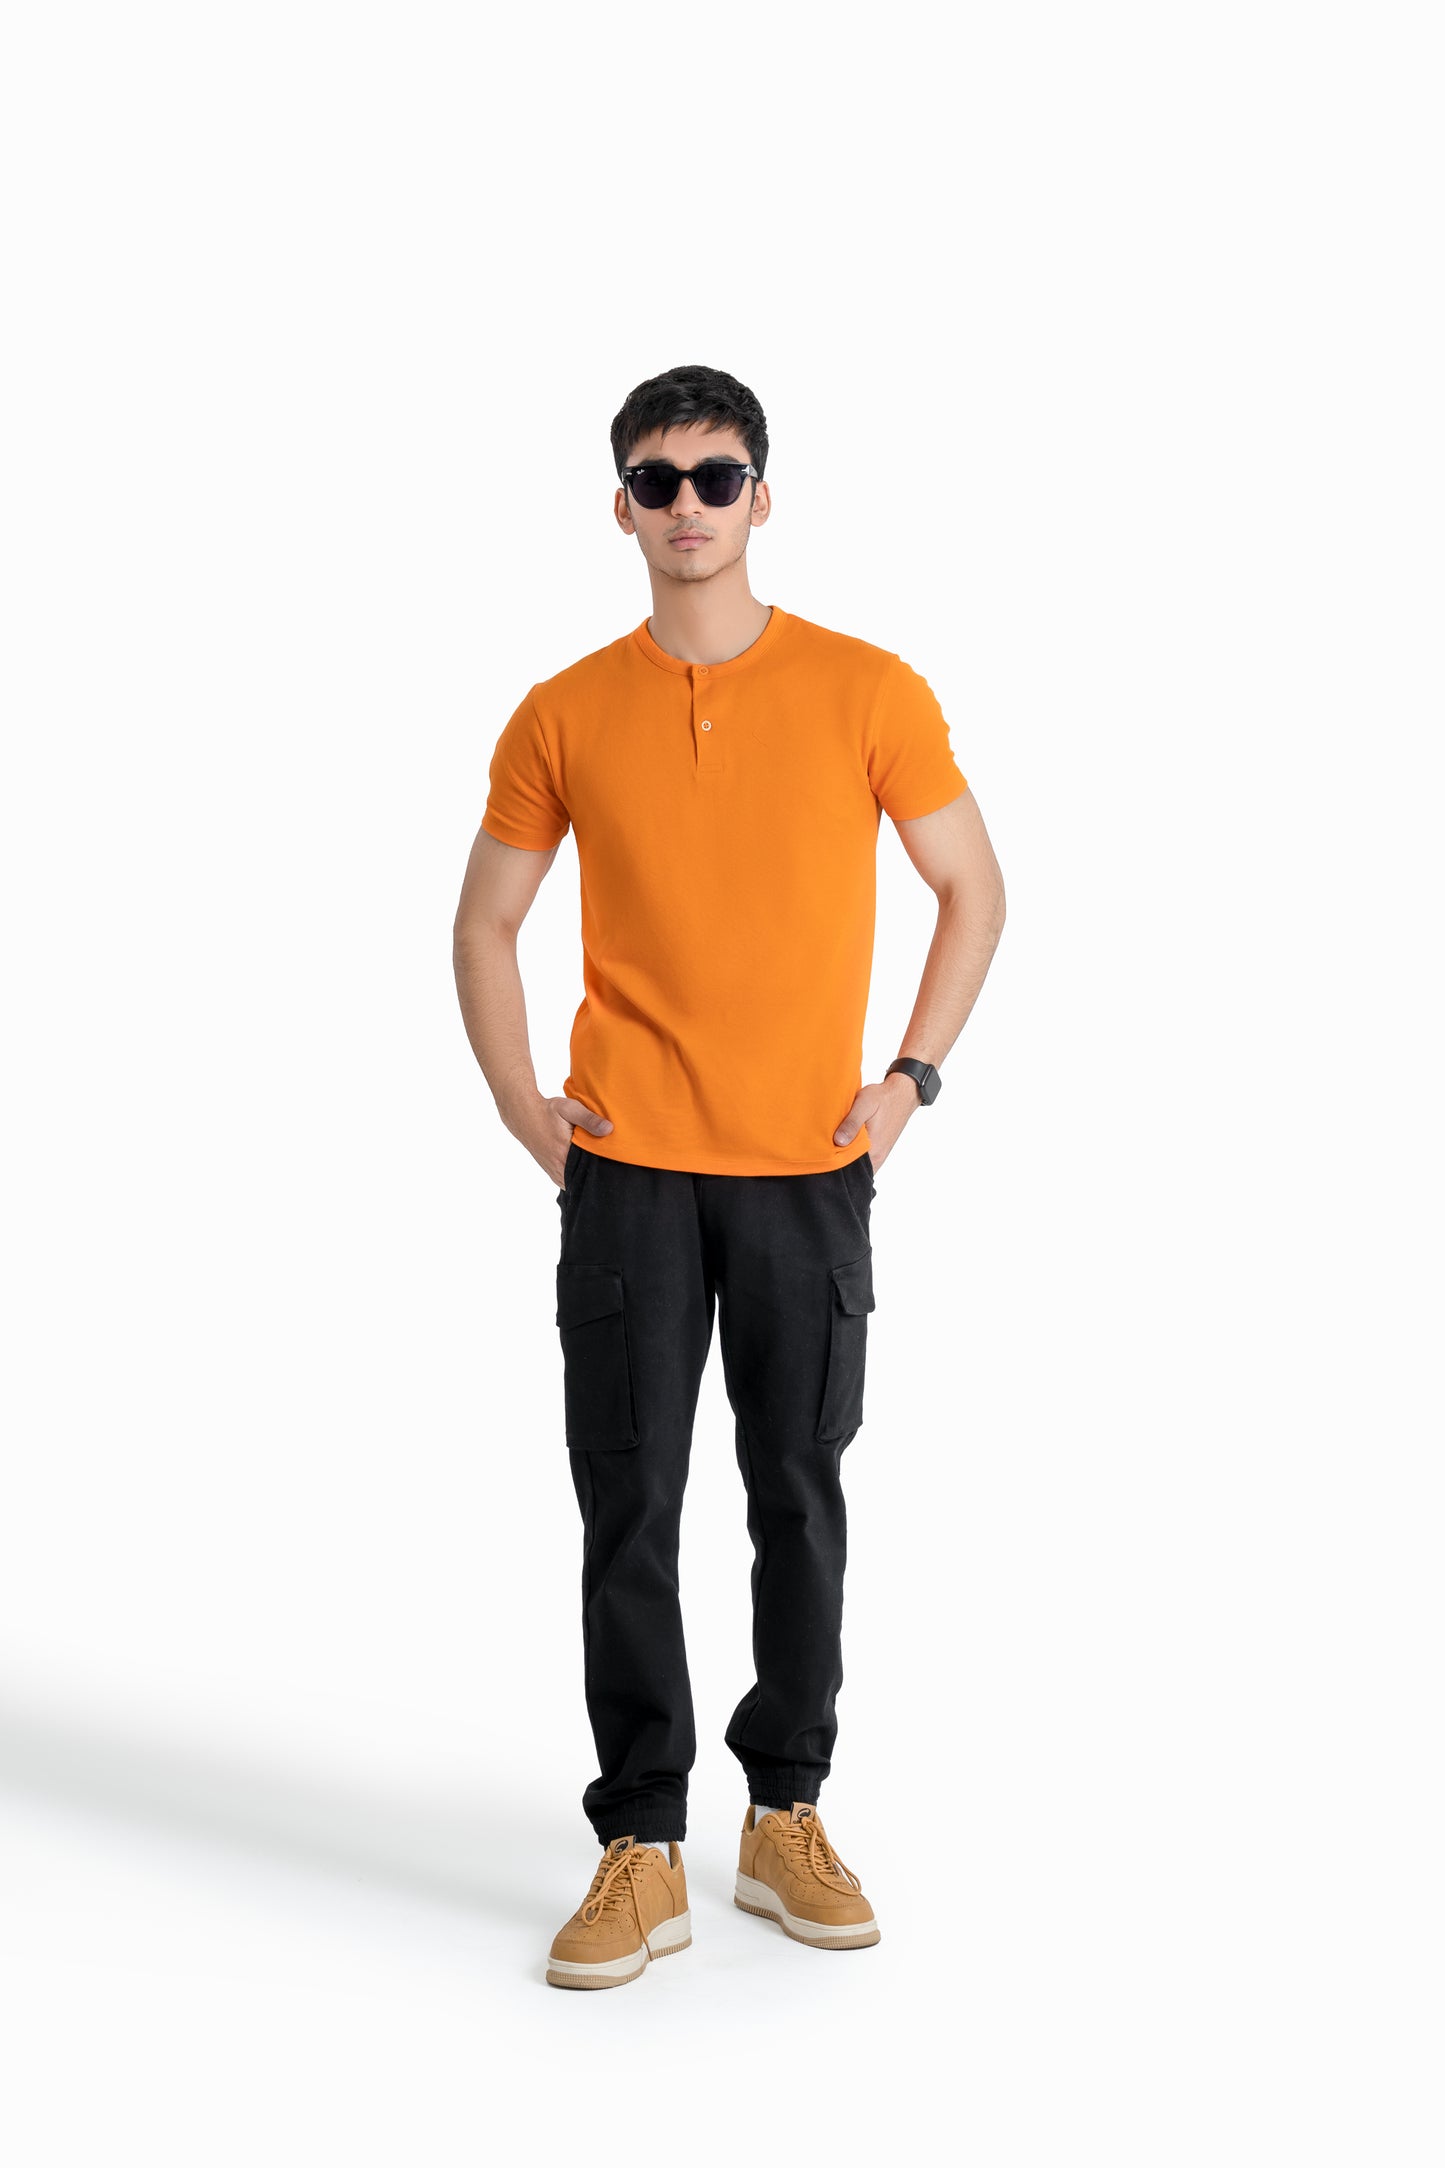 Henley T-shirt in Tangerine